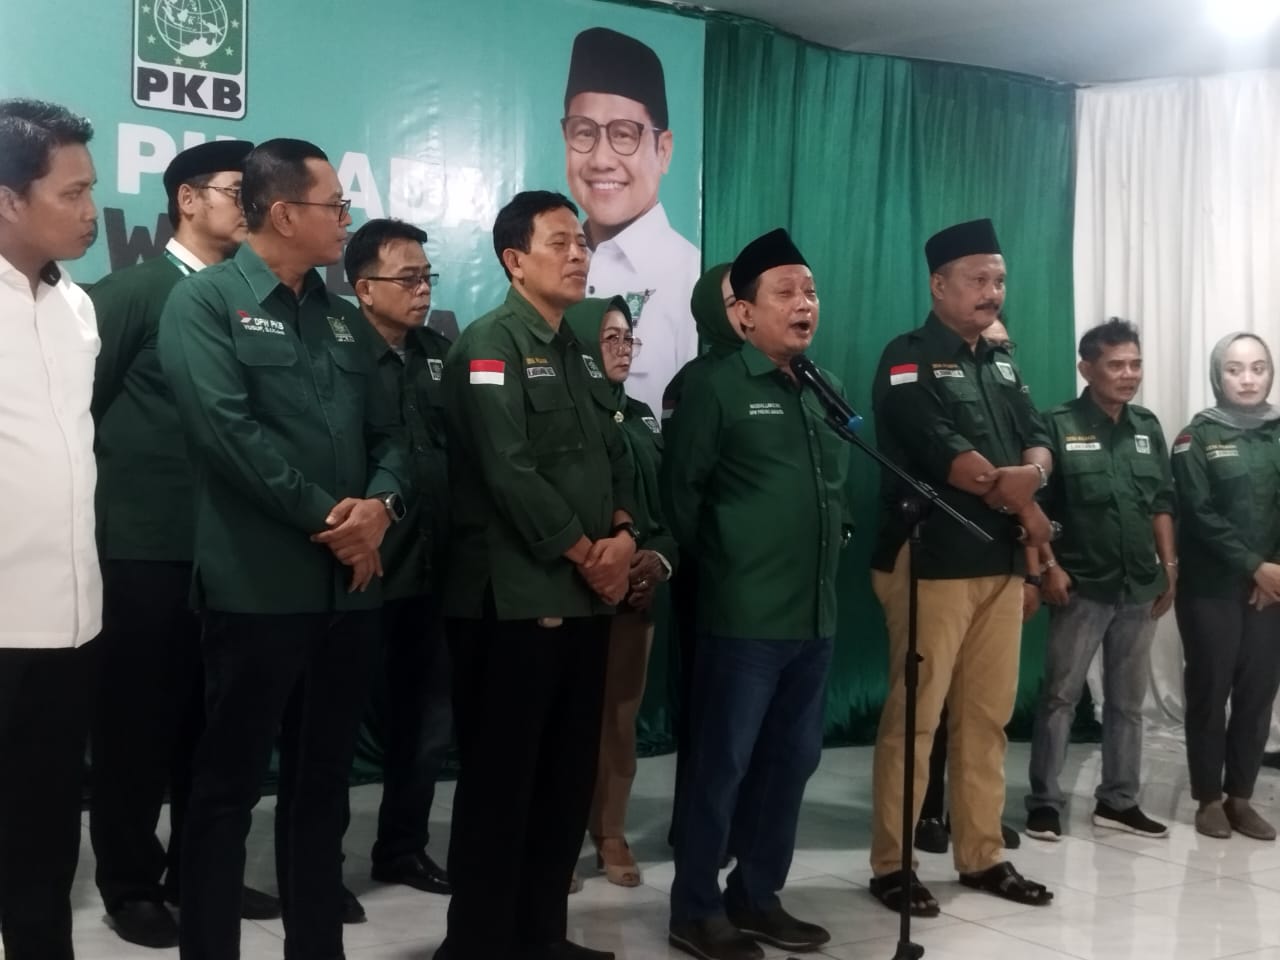 UKK Rampung, PKB Resmi Dukung Anies Baswedan di Pilgub DKI 2024 